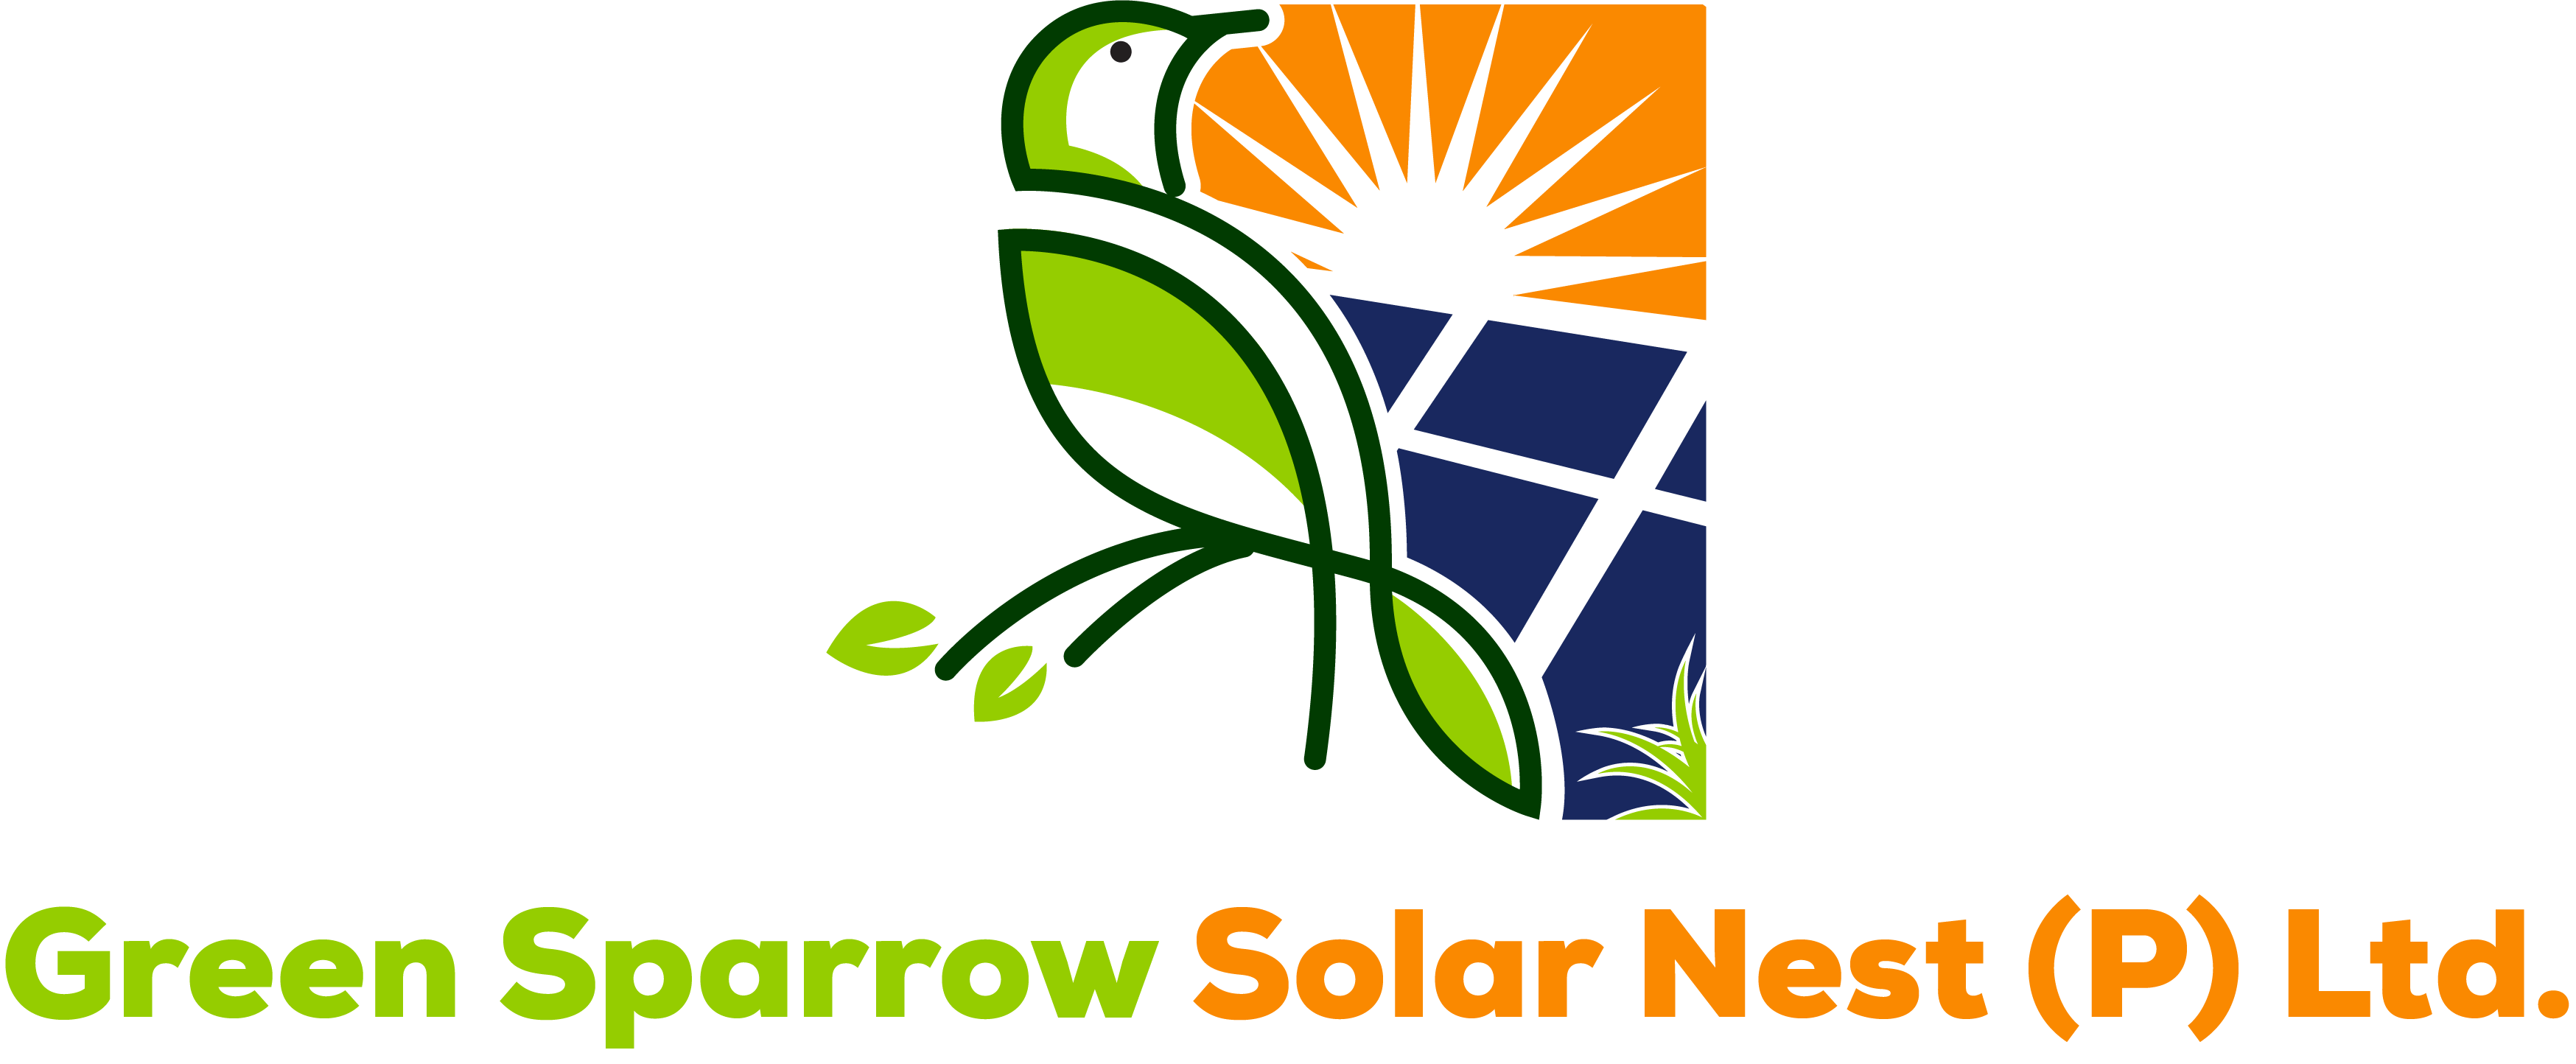 Green Sparrow Solar Nest Pvt Ltd